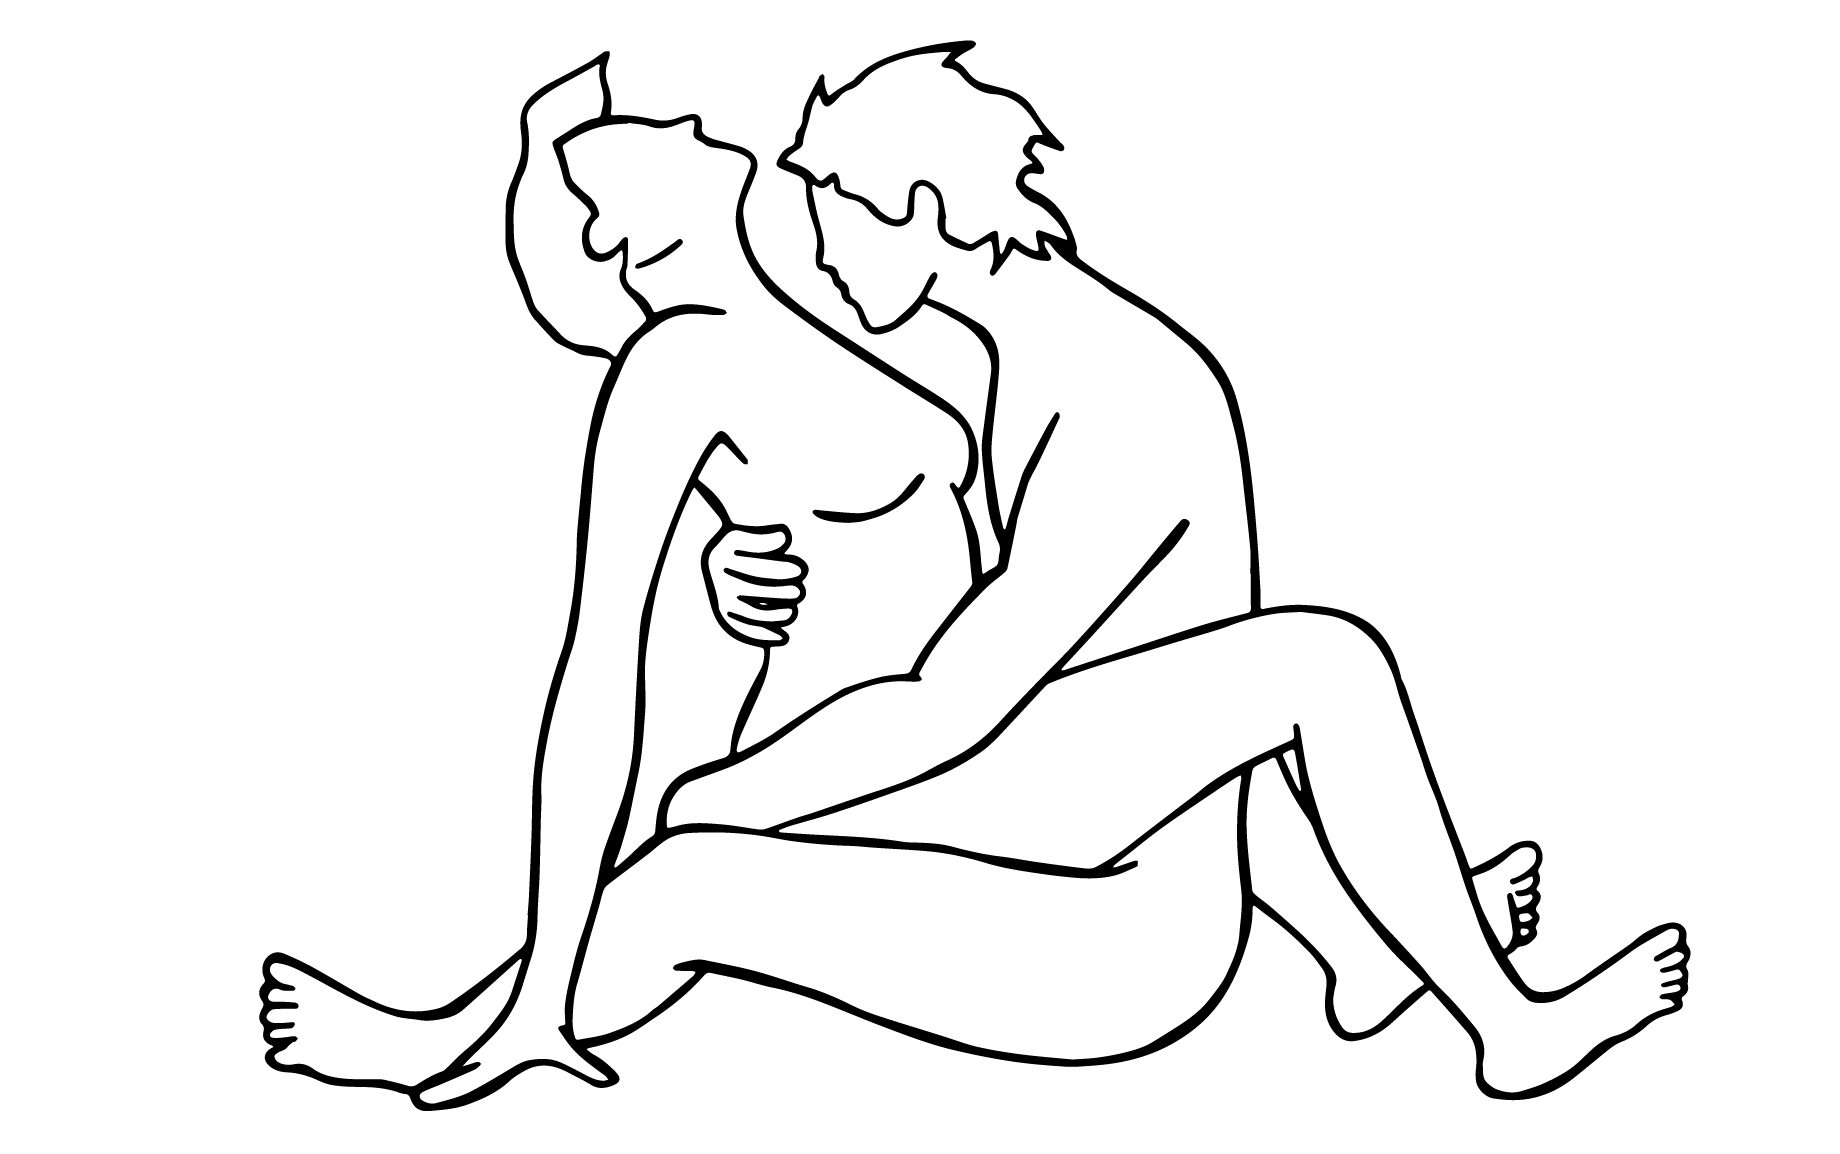 Illustration of lotus sex position